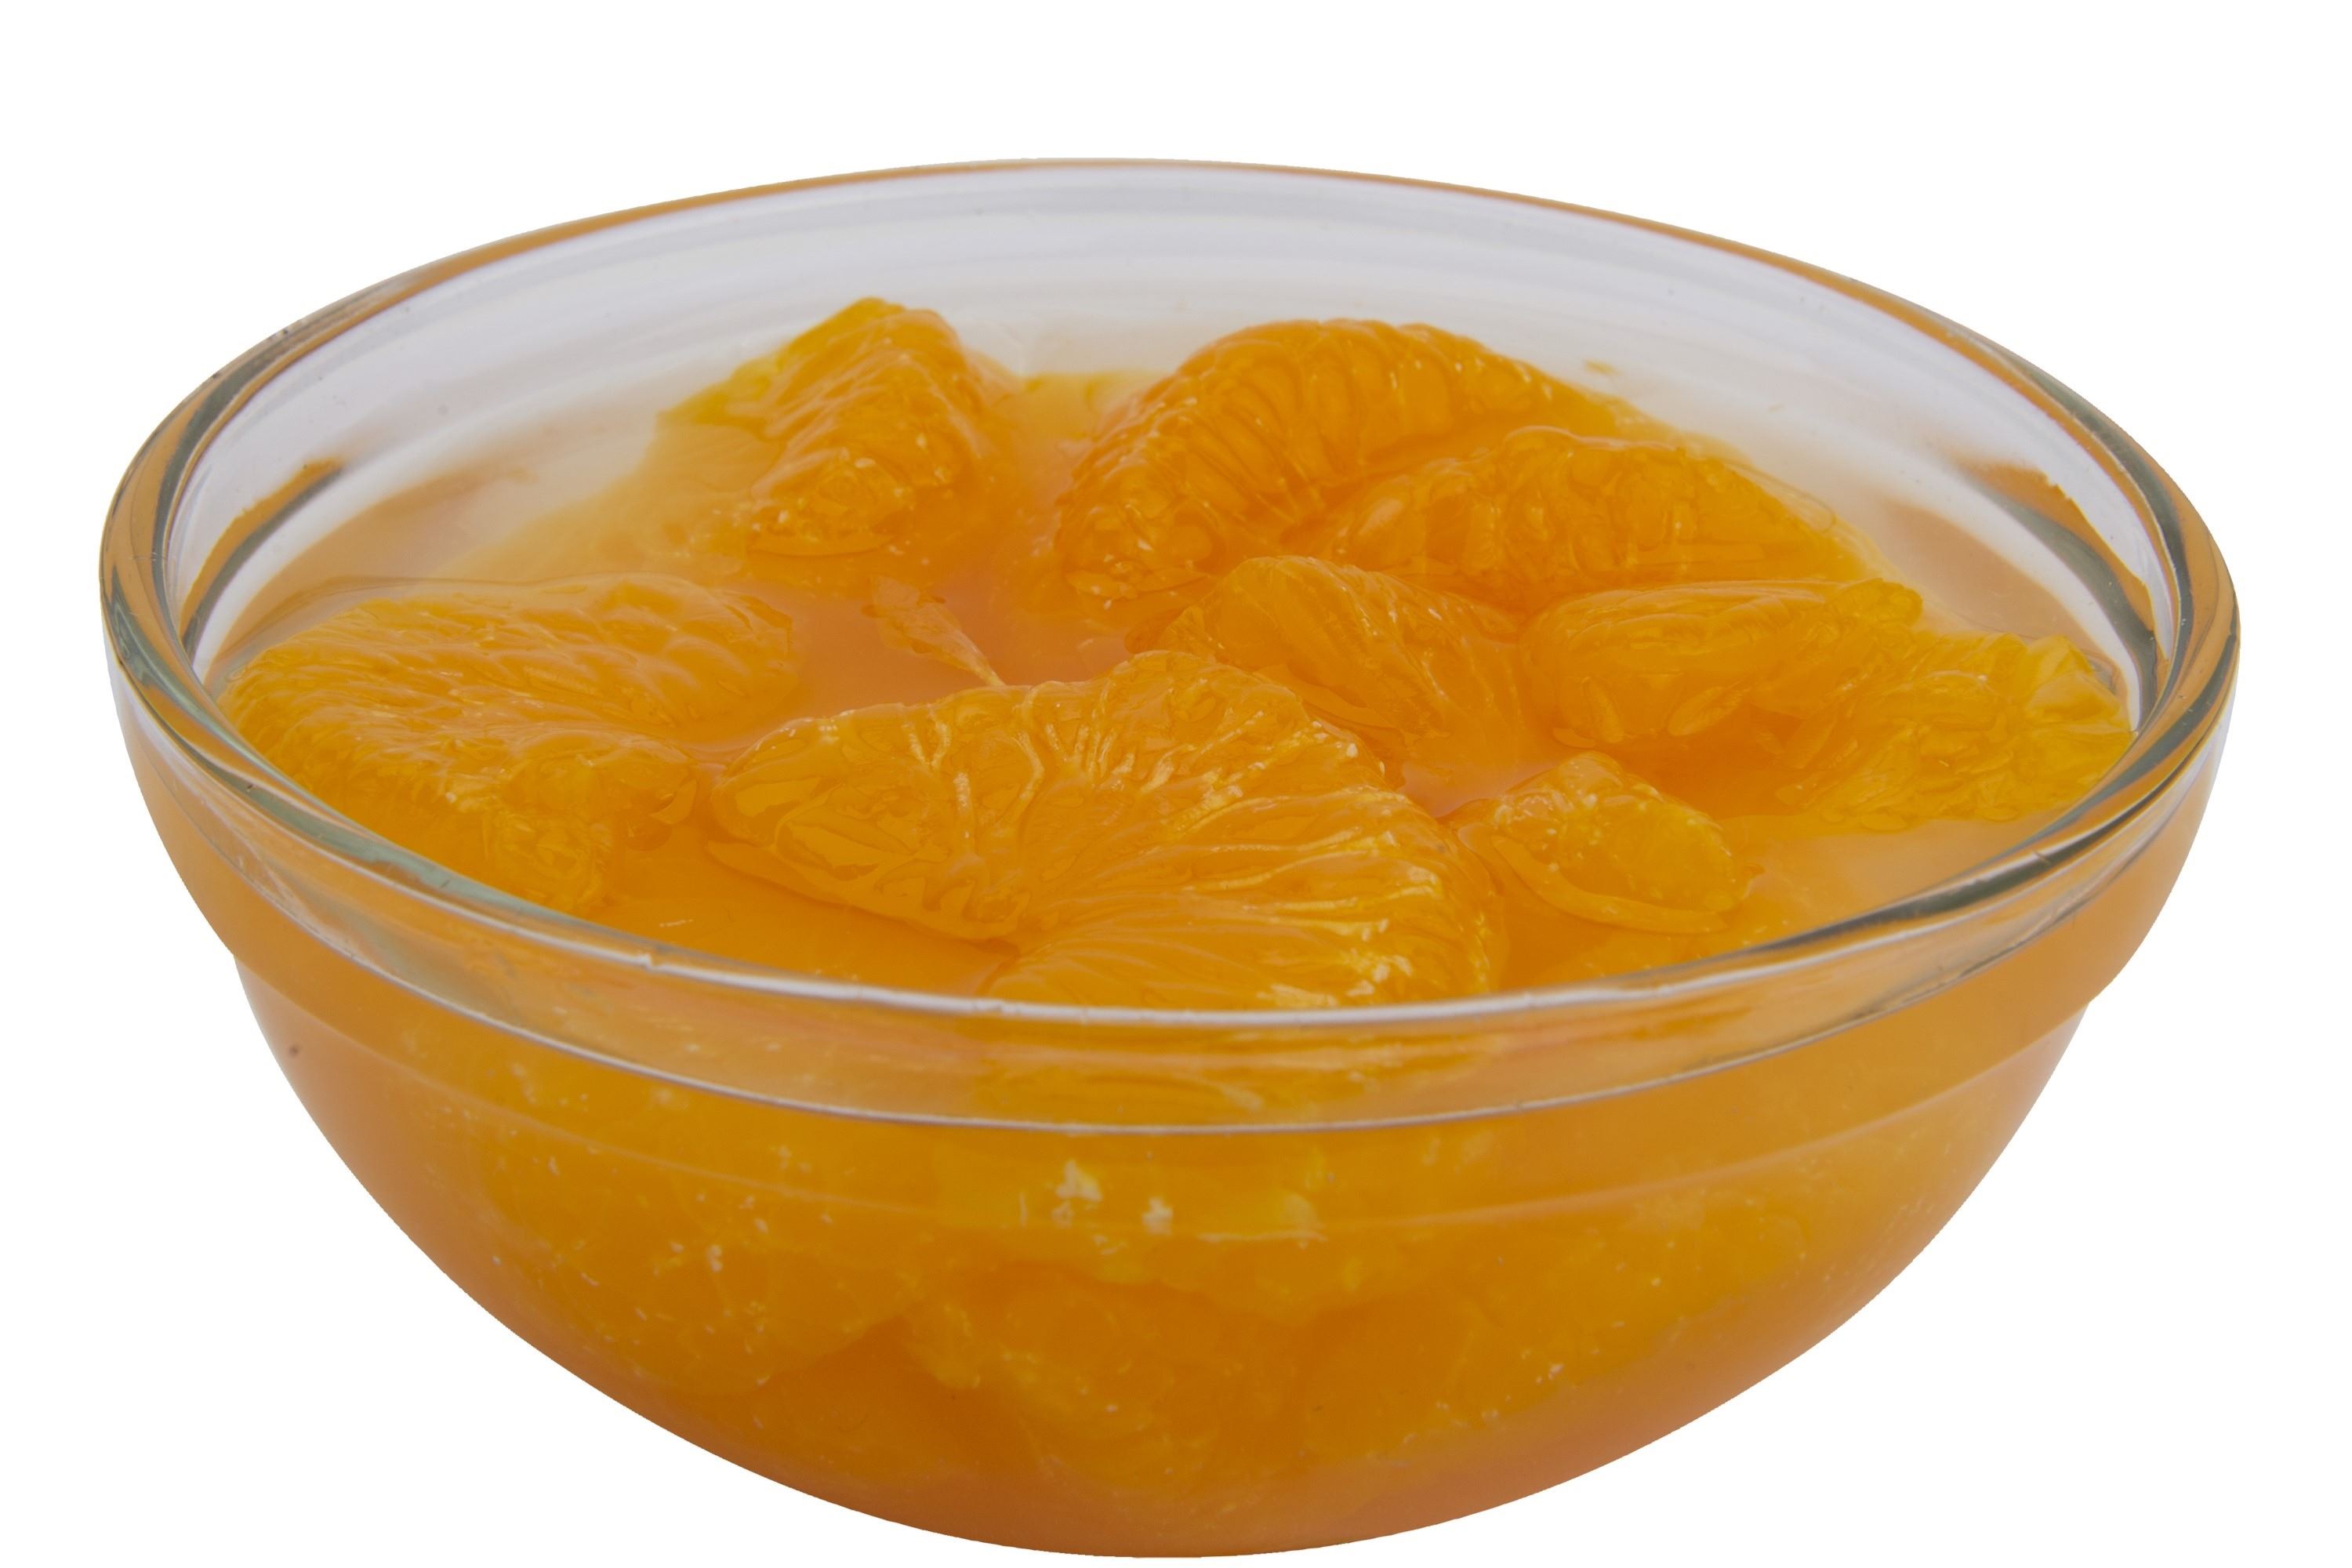 20-mandarin-orange-fruit-cup-nutrition-facts